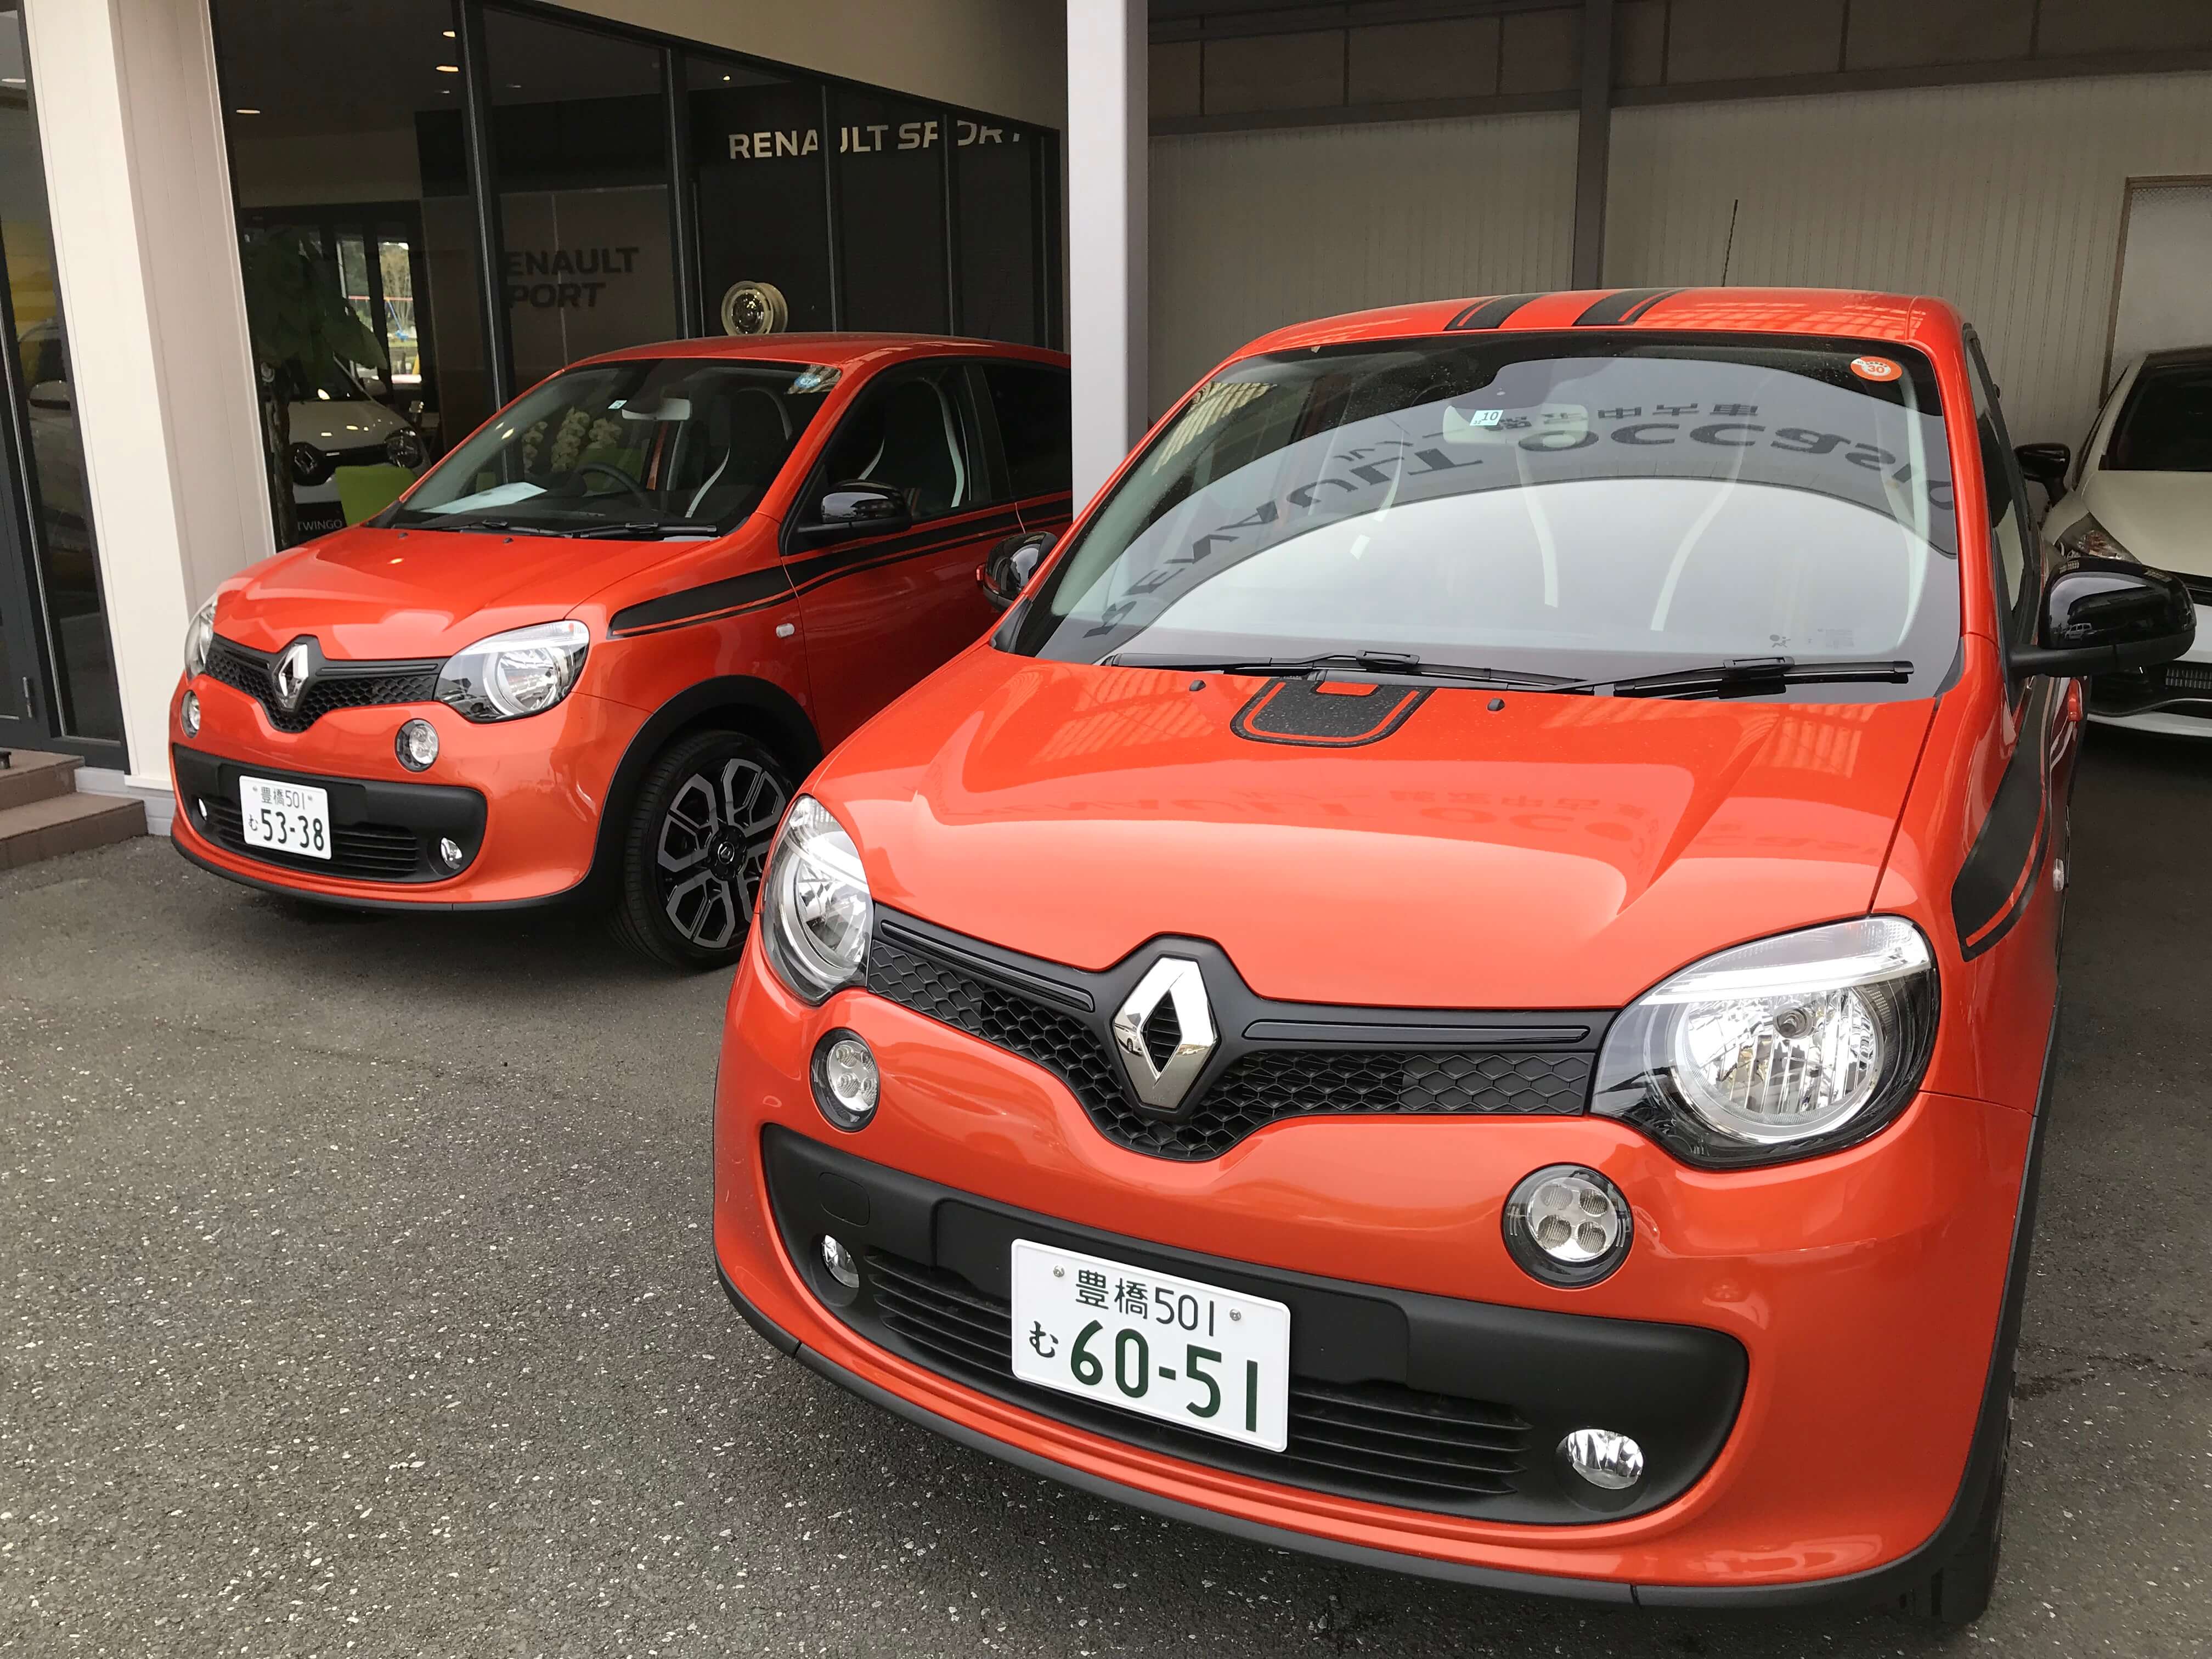 Renault Japon ルノー豊川 マニュアルモデルの試乗車乗り比べ出来ます